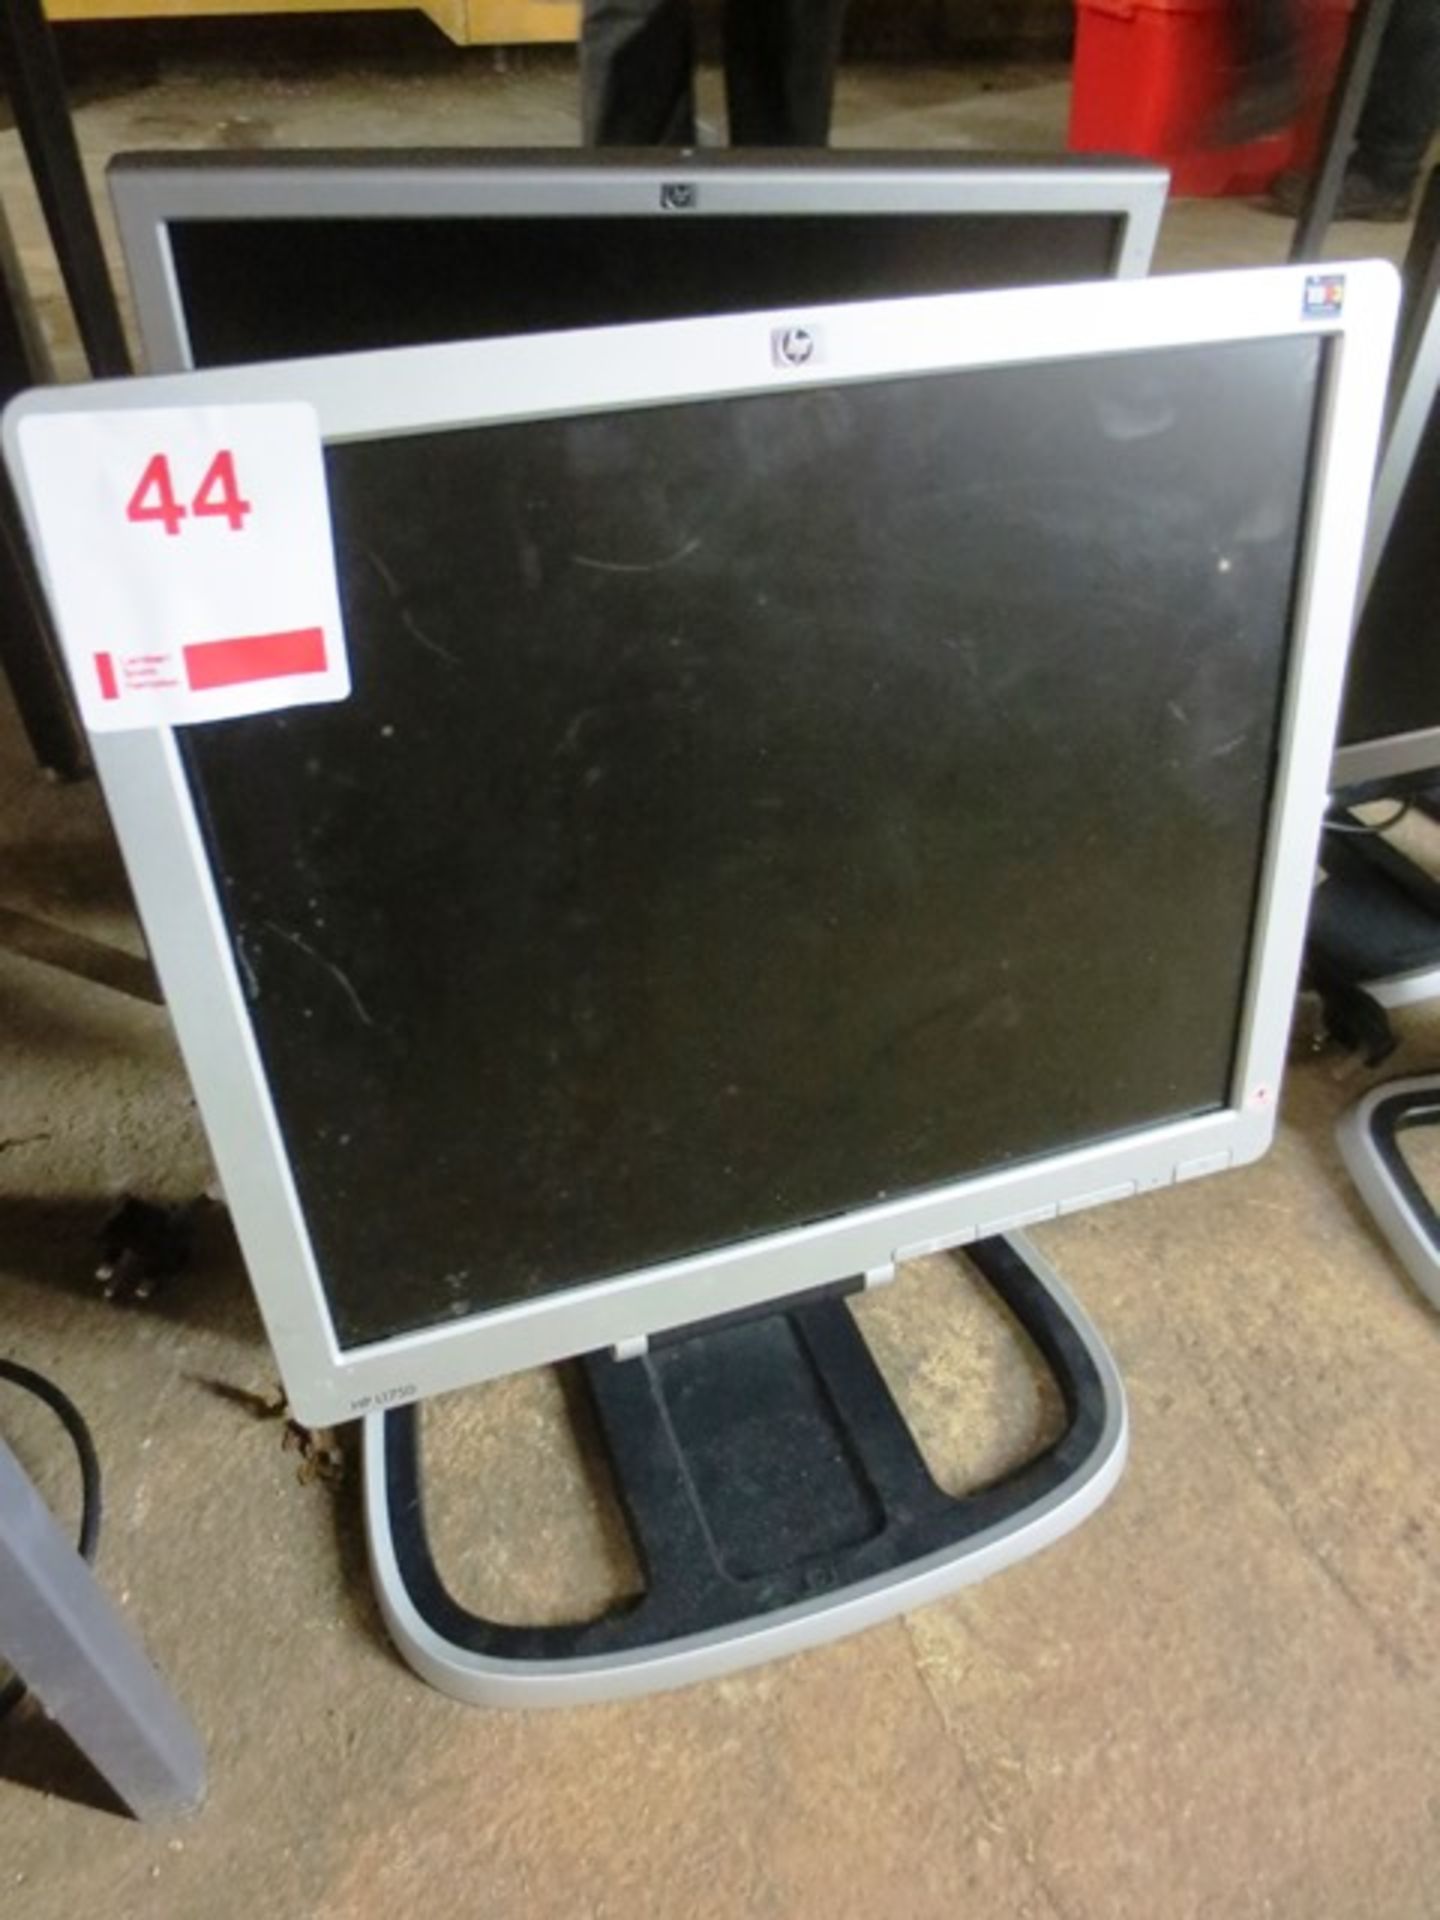 Two HP flat screen LCD monitors